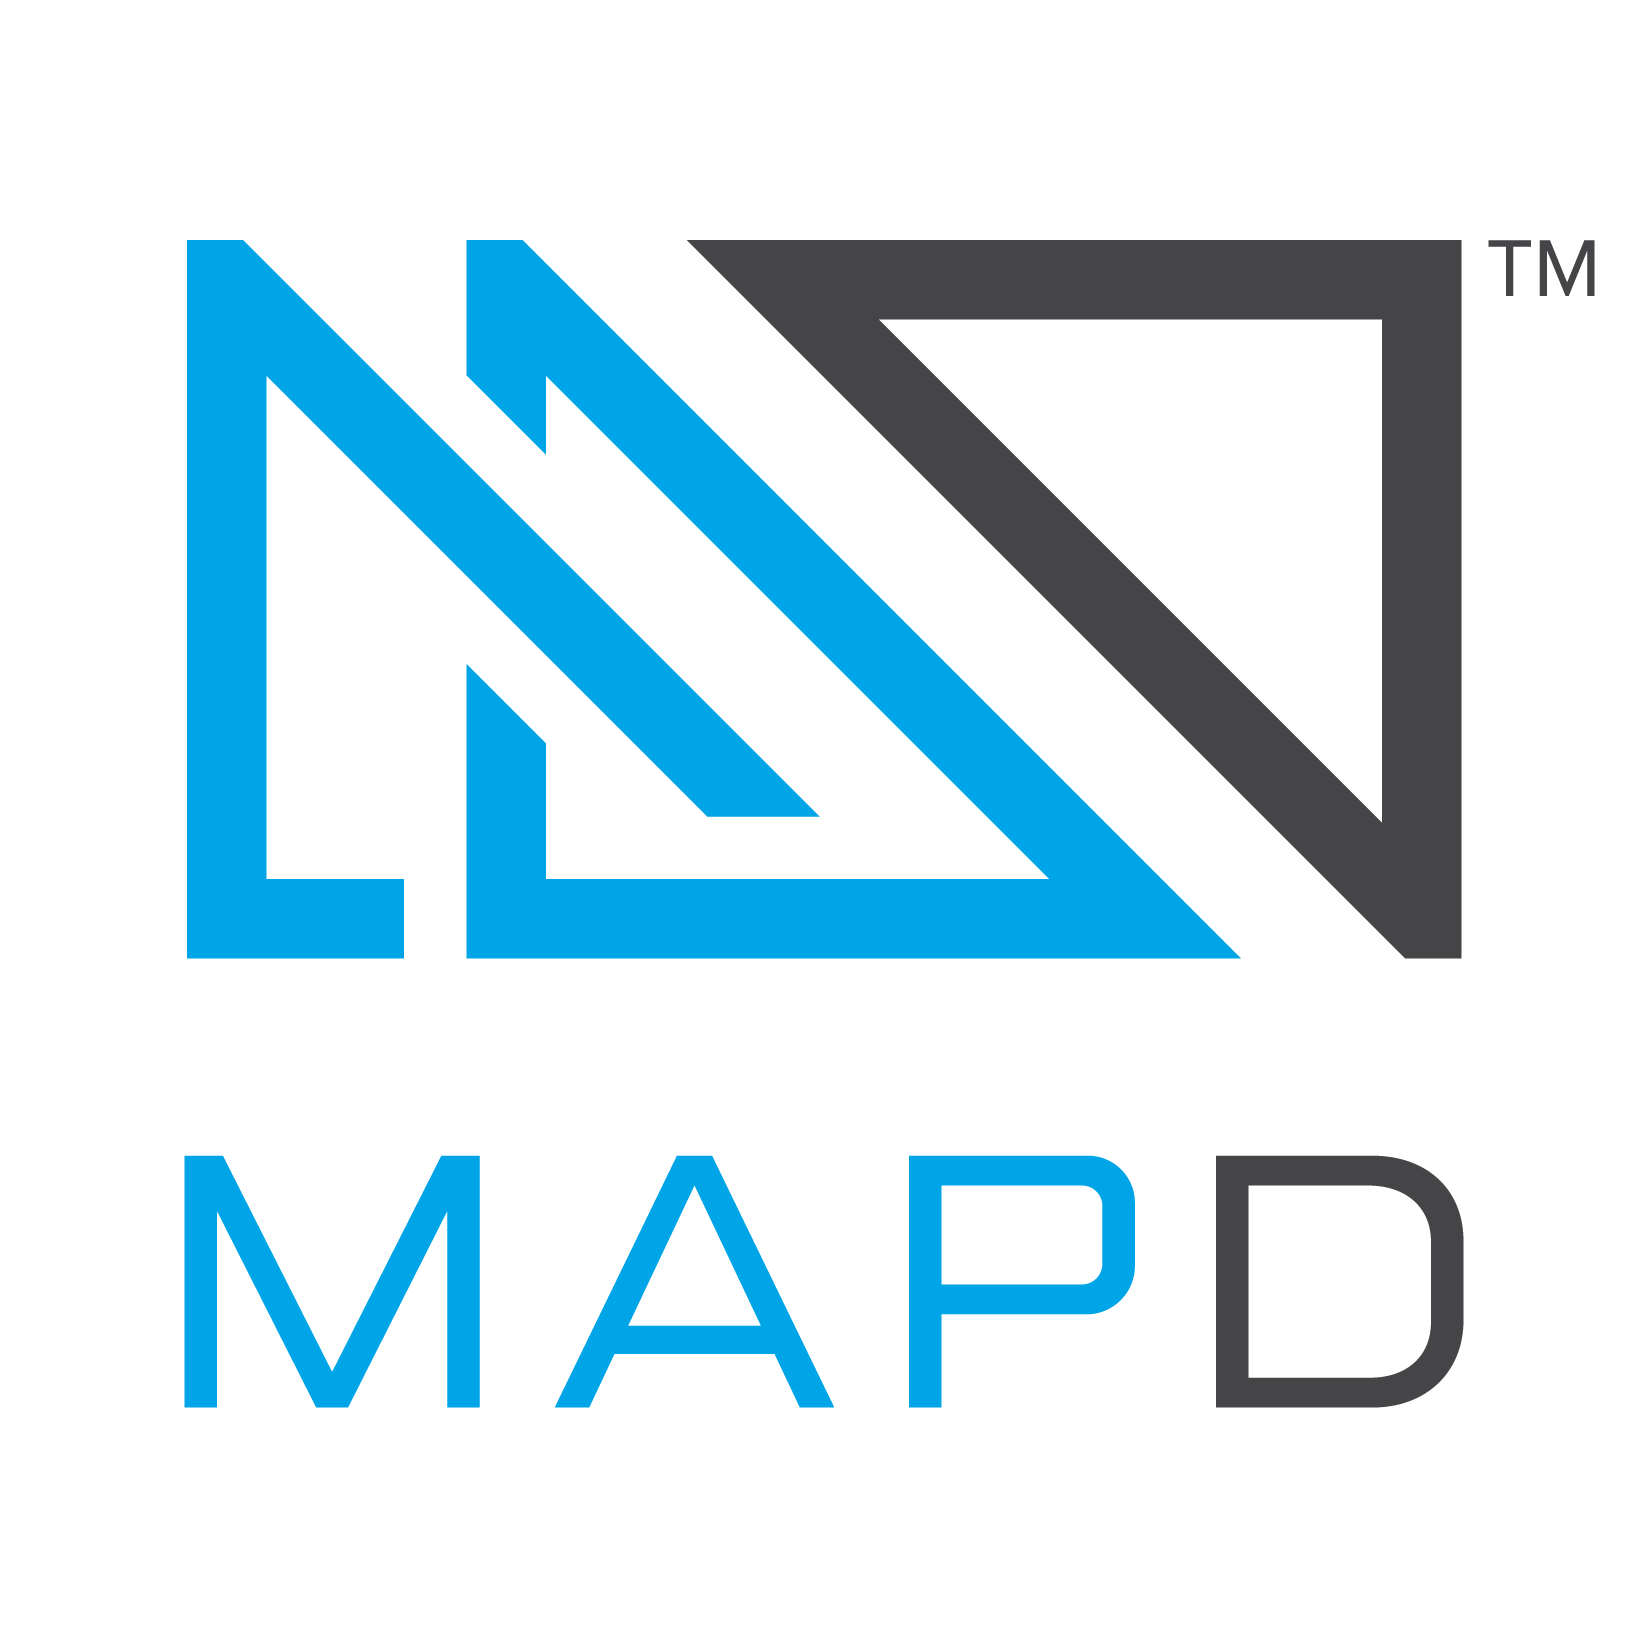 MapD Logo